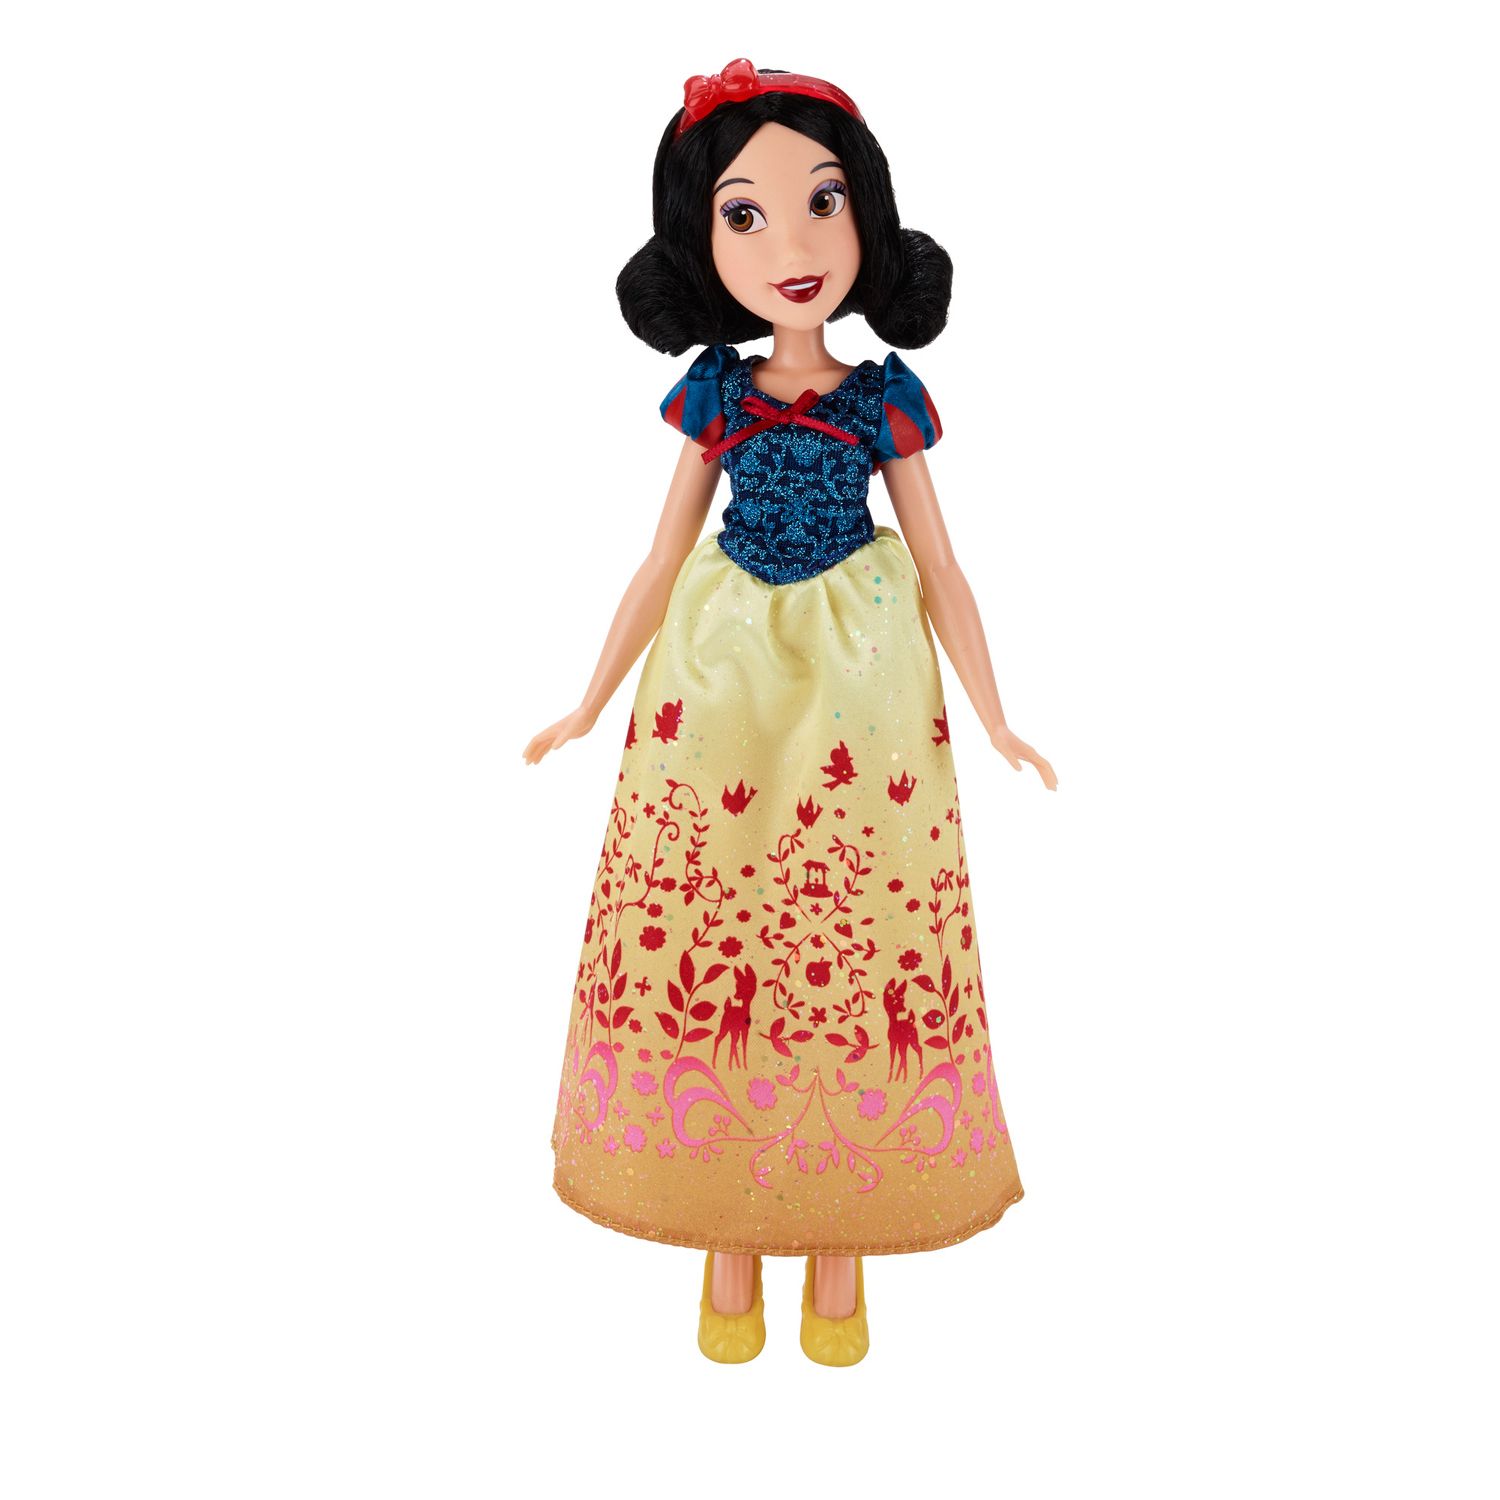 Disney Princess Peasant Snow White Doll Precious Moments 12" Vinyl DOL for sale online